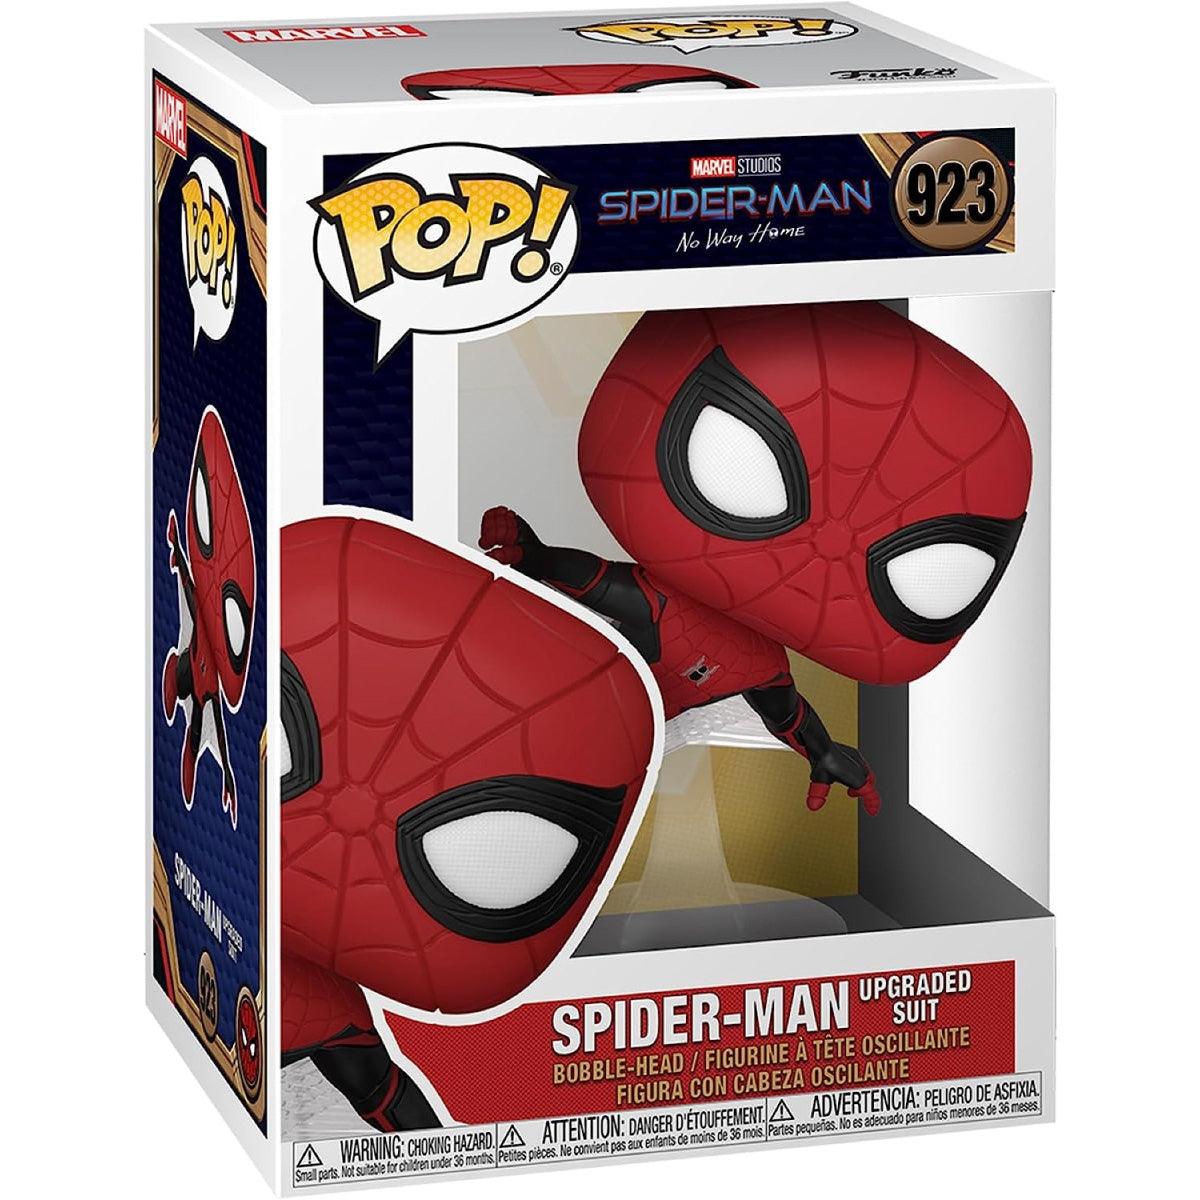 Spider-man: No Way Home: Funko Pop! - Spiderman upgraded suit #923 - Magic Dreams Store